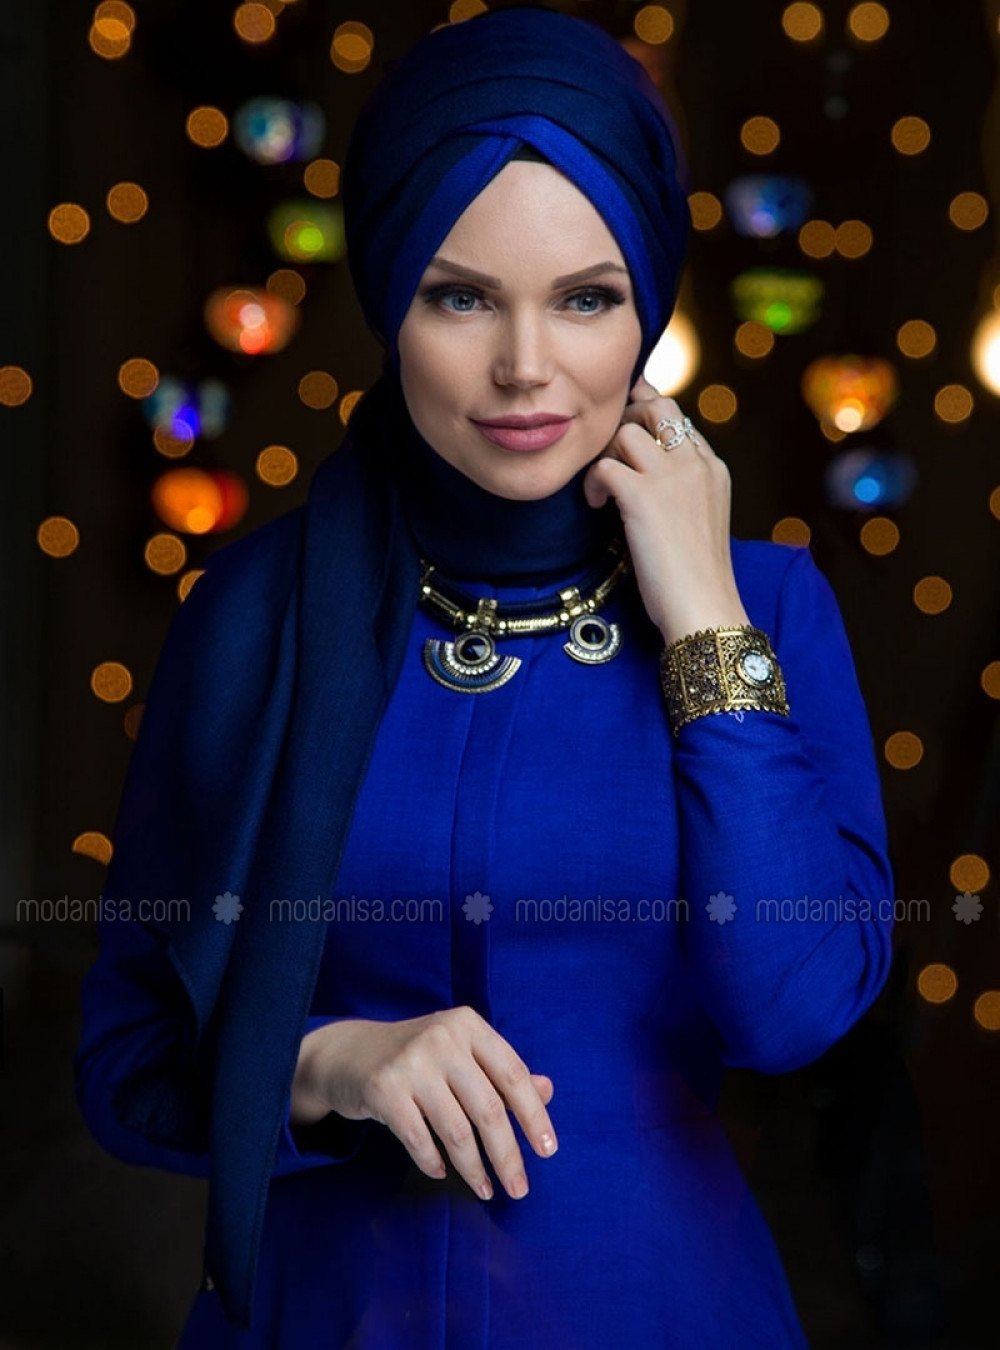 Muslima Wear Queen Püsküllü Laci̇vert Şal